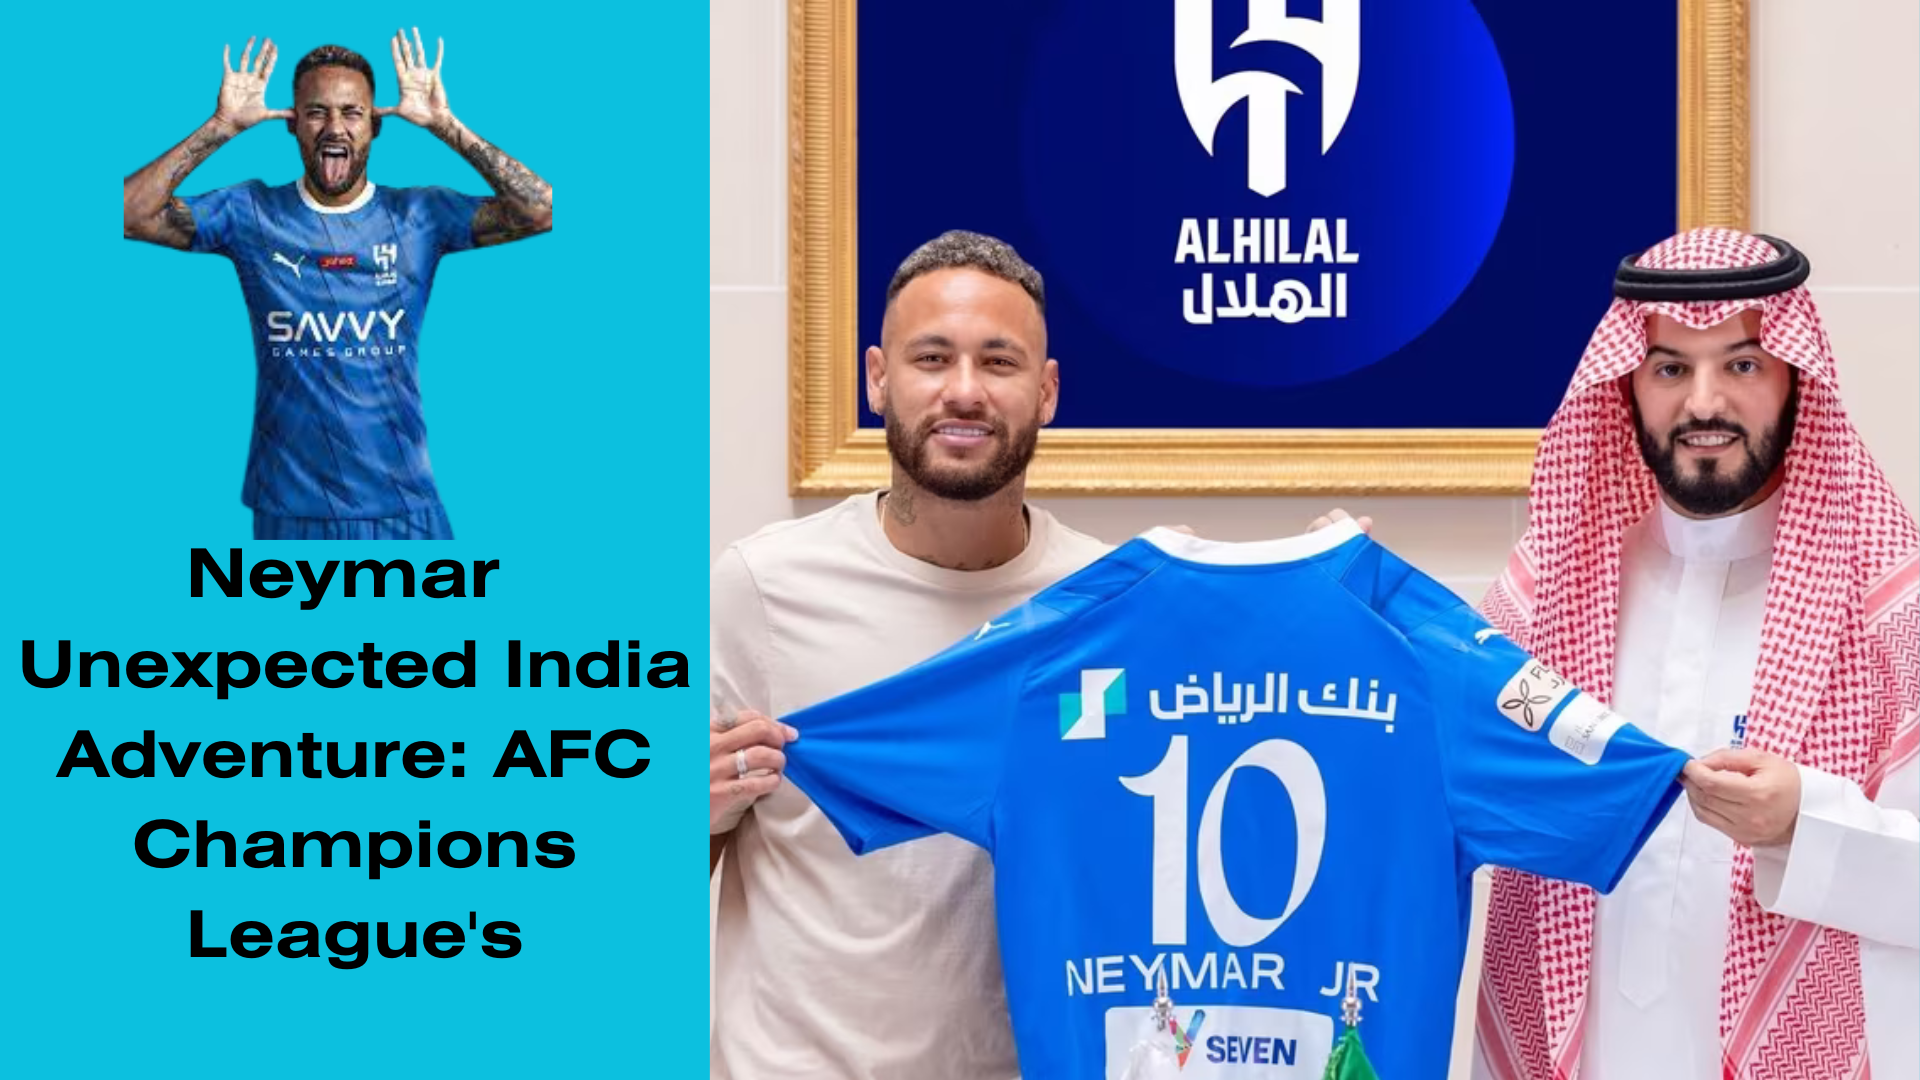 Neymar's Unexpected India Adventure